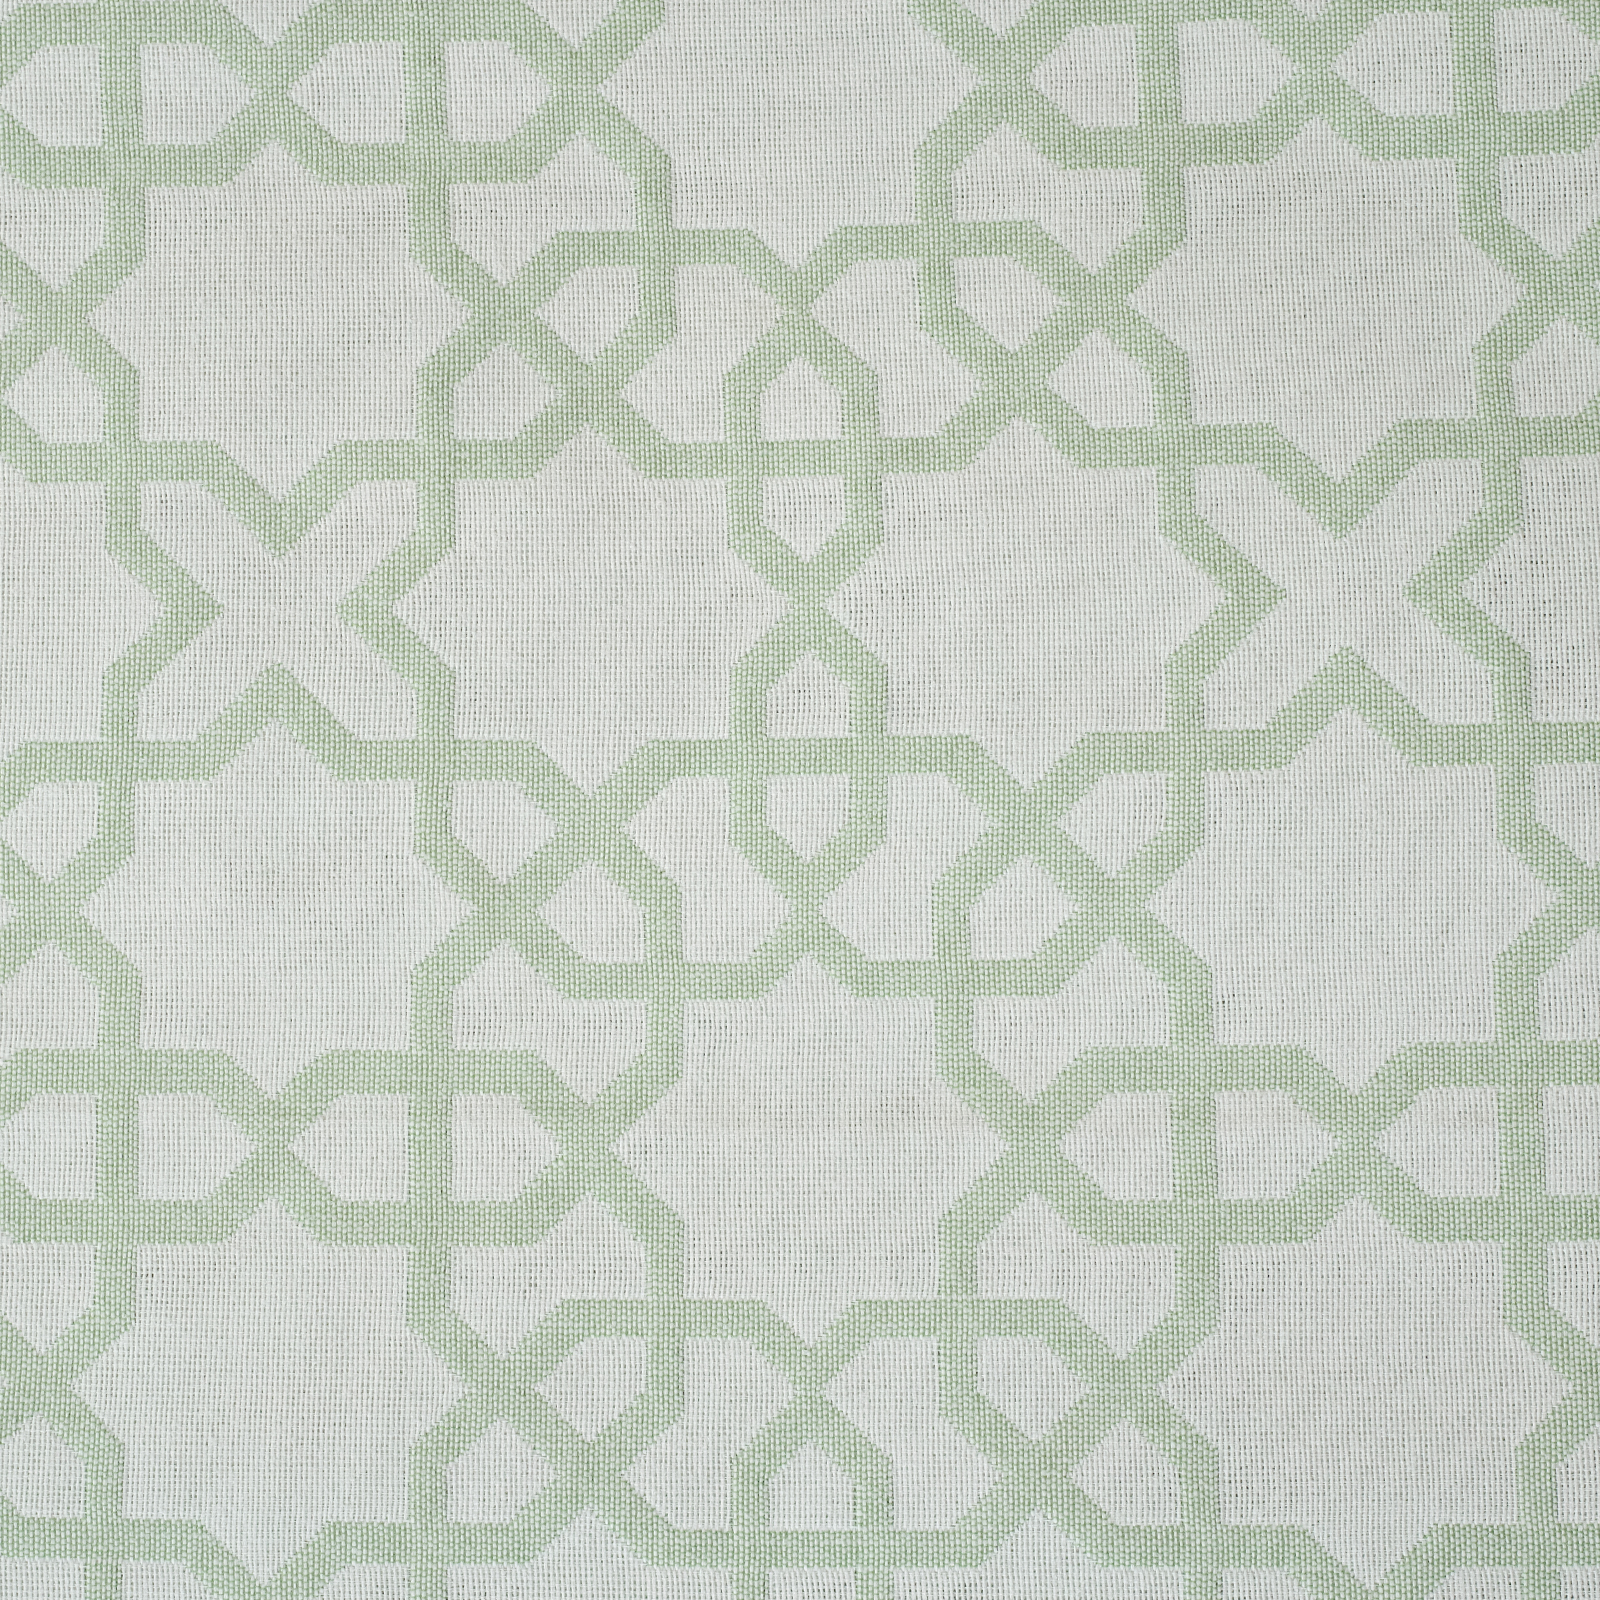 Покрывало Motivo orientale, зеленое CozyHome, цвет зеленый, размер 160х210 - фото 3